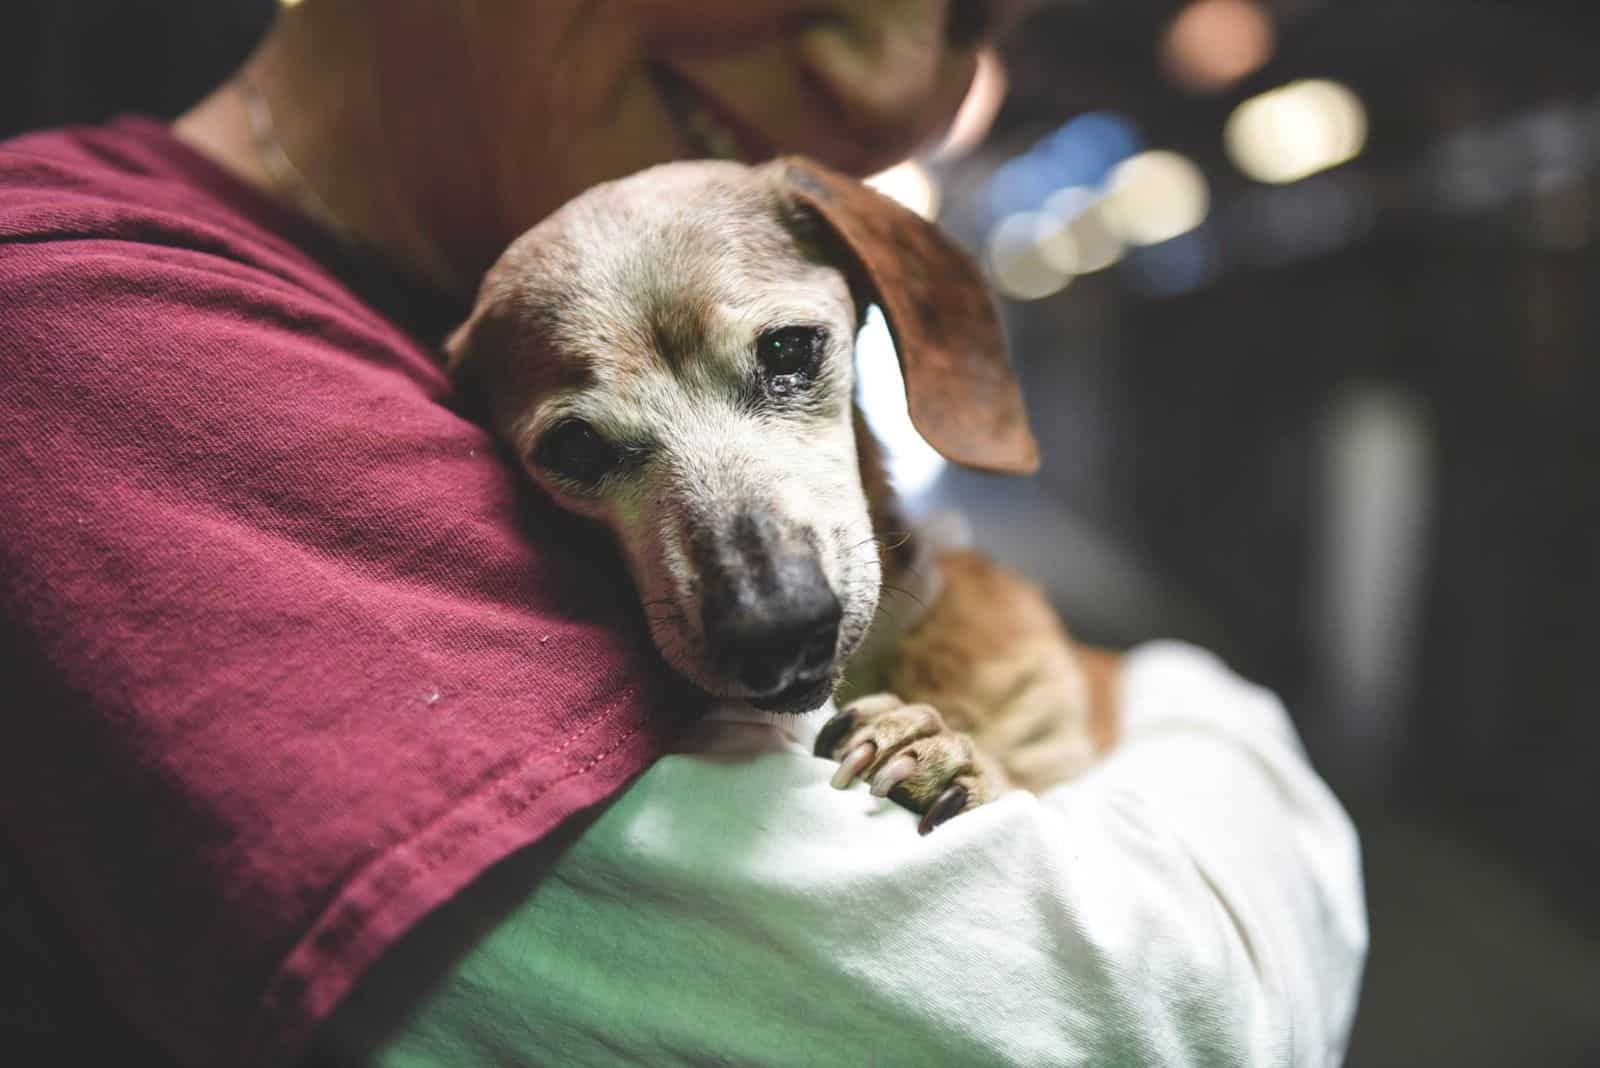 Muneca, The Blind Senior Dog, Finally Gets A Loving Family